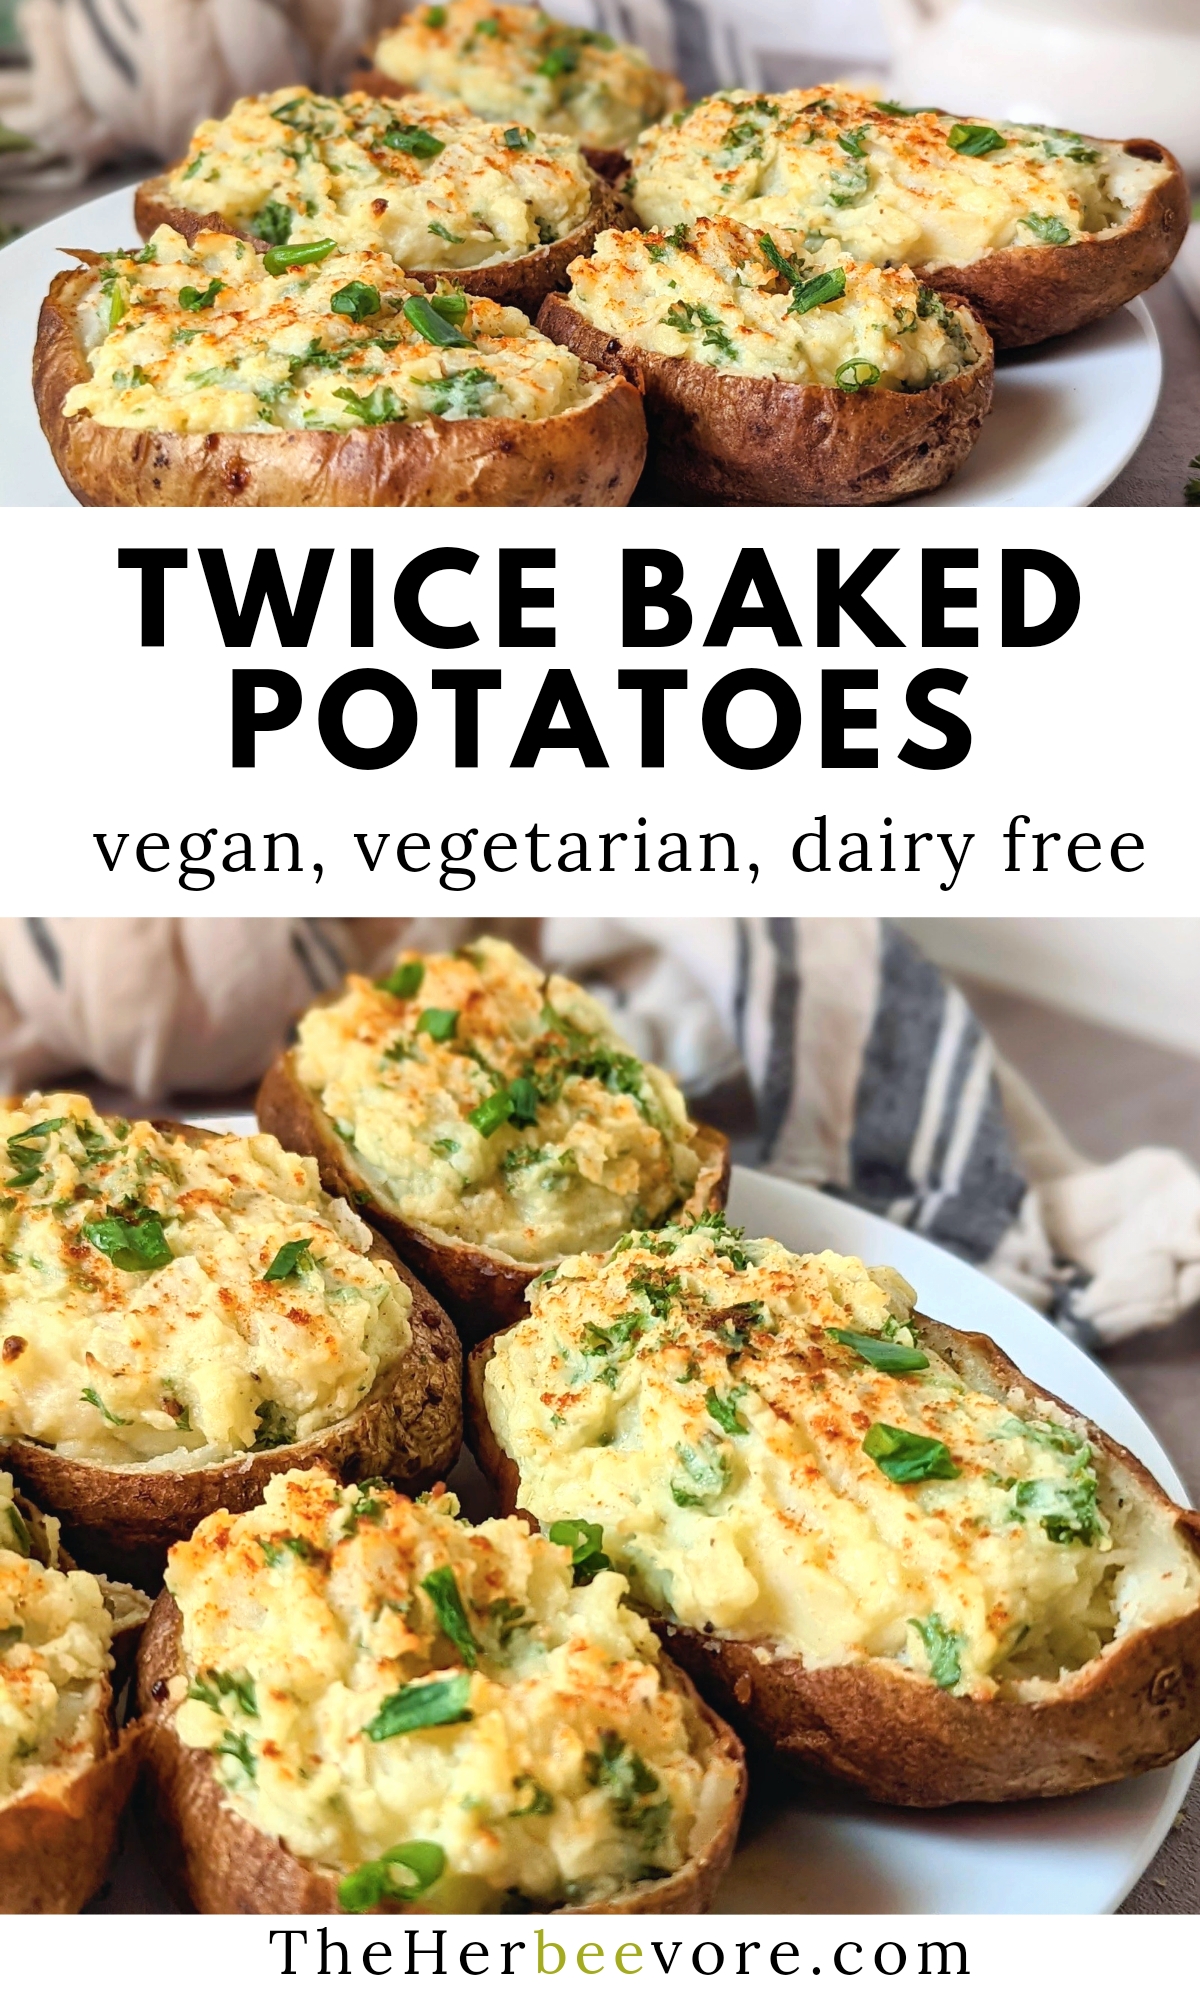 vegan twice baked potato recipe vegetarian gluten free dairy free twice baked potatoes without cheese or milk